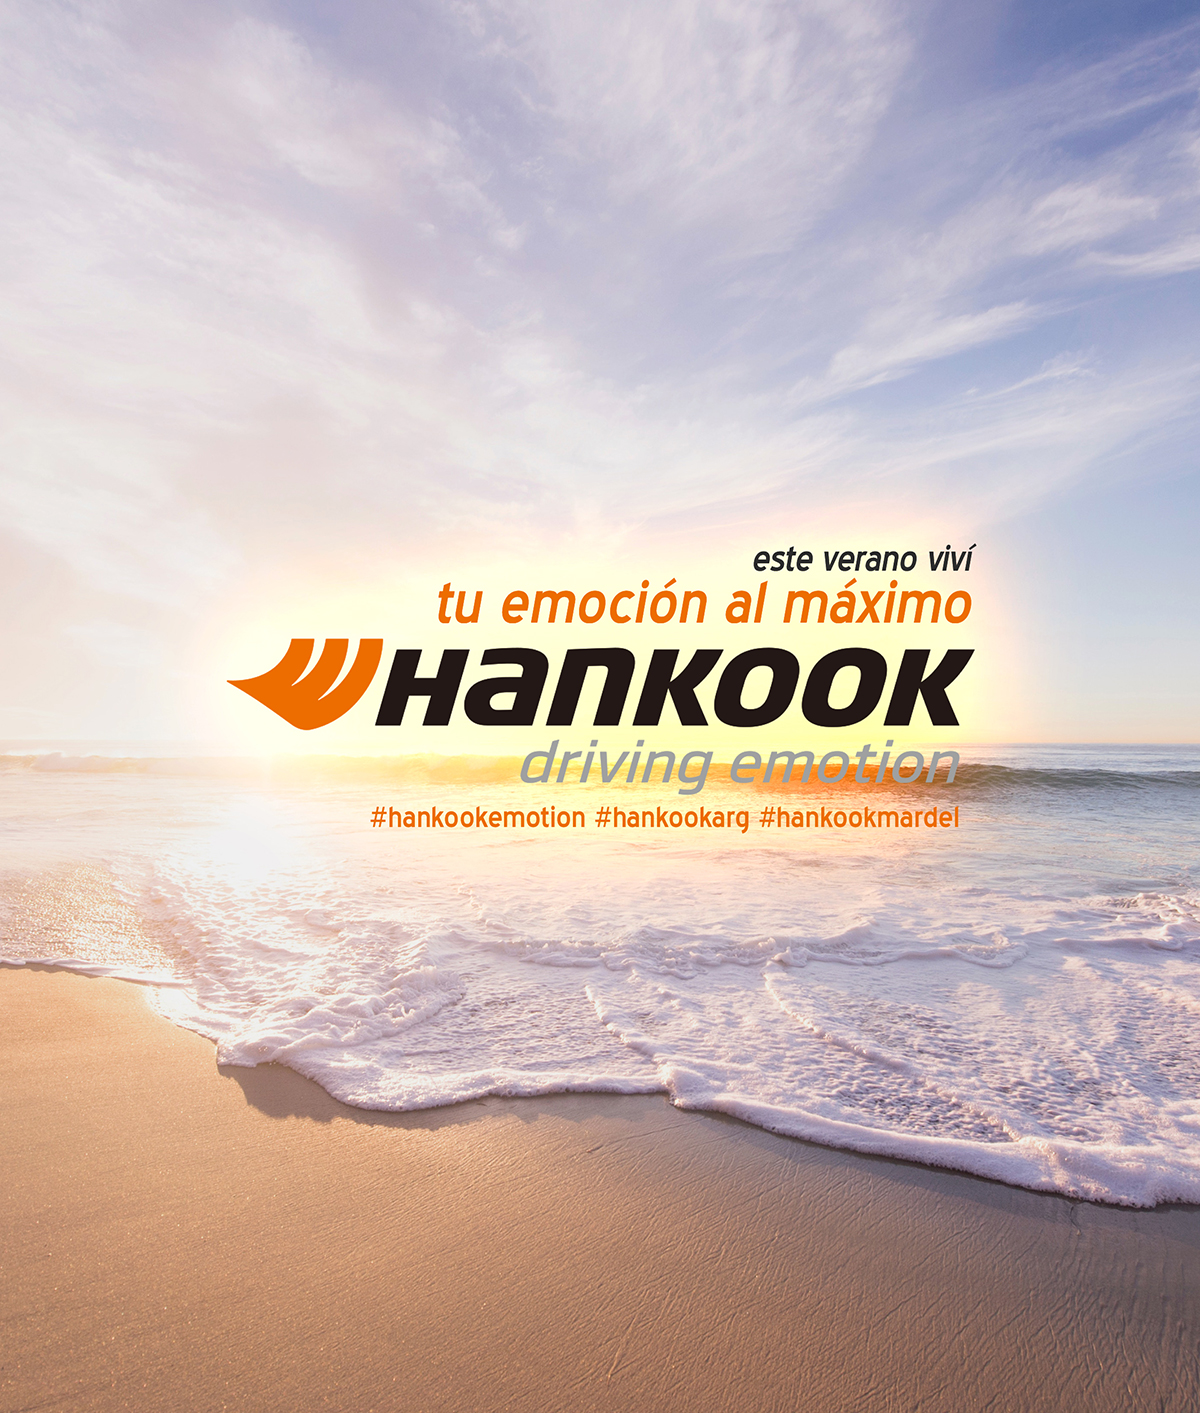 Promoción en vía pública para Hankook tire Arg. by UMM ideas SA